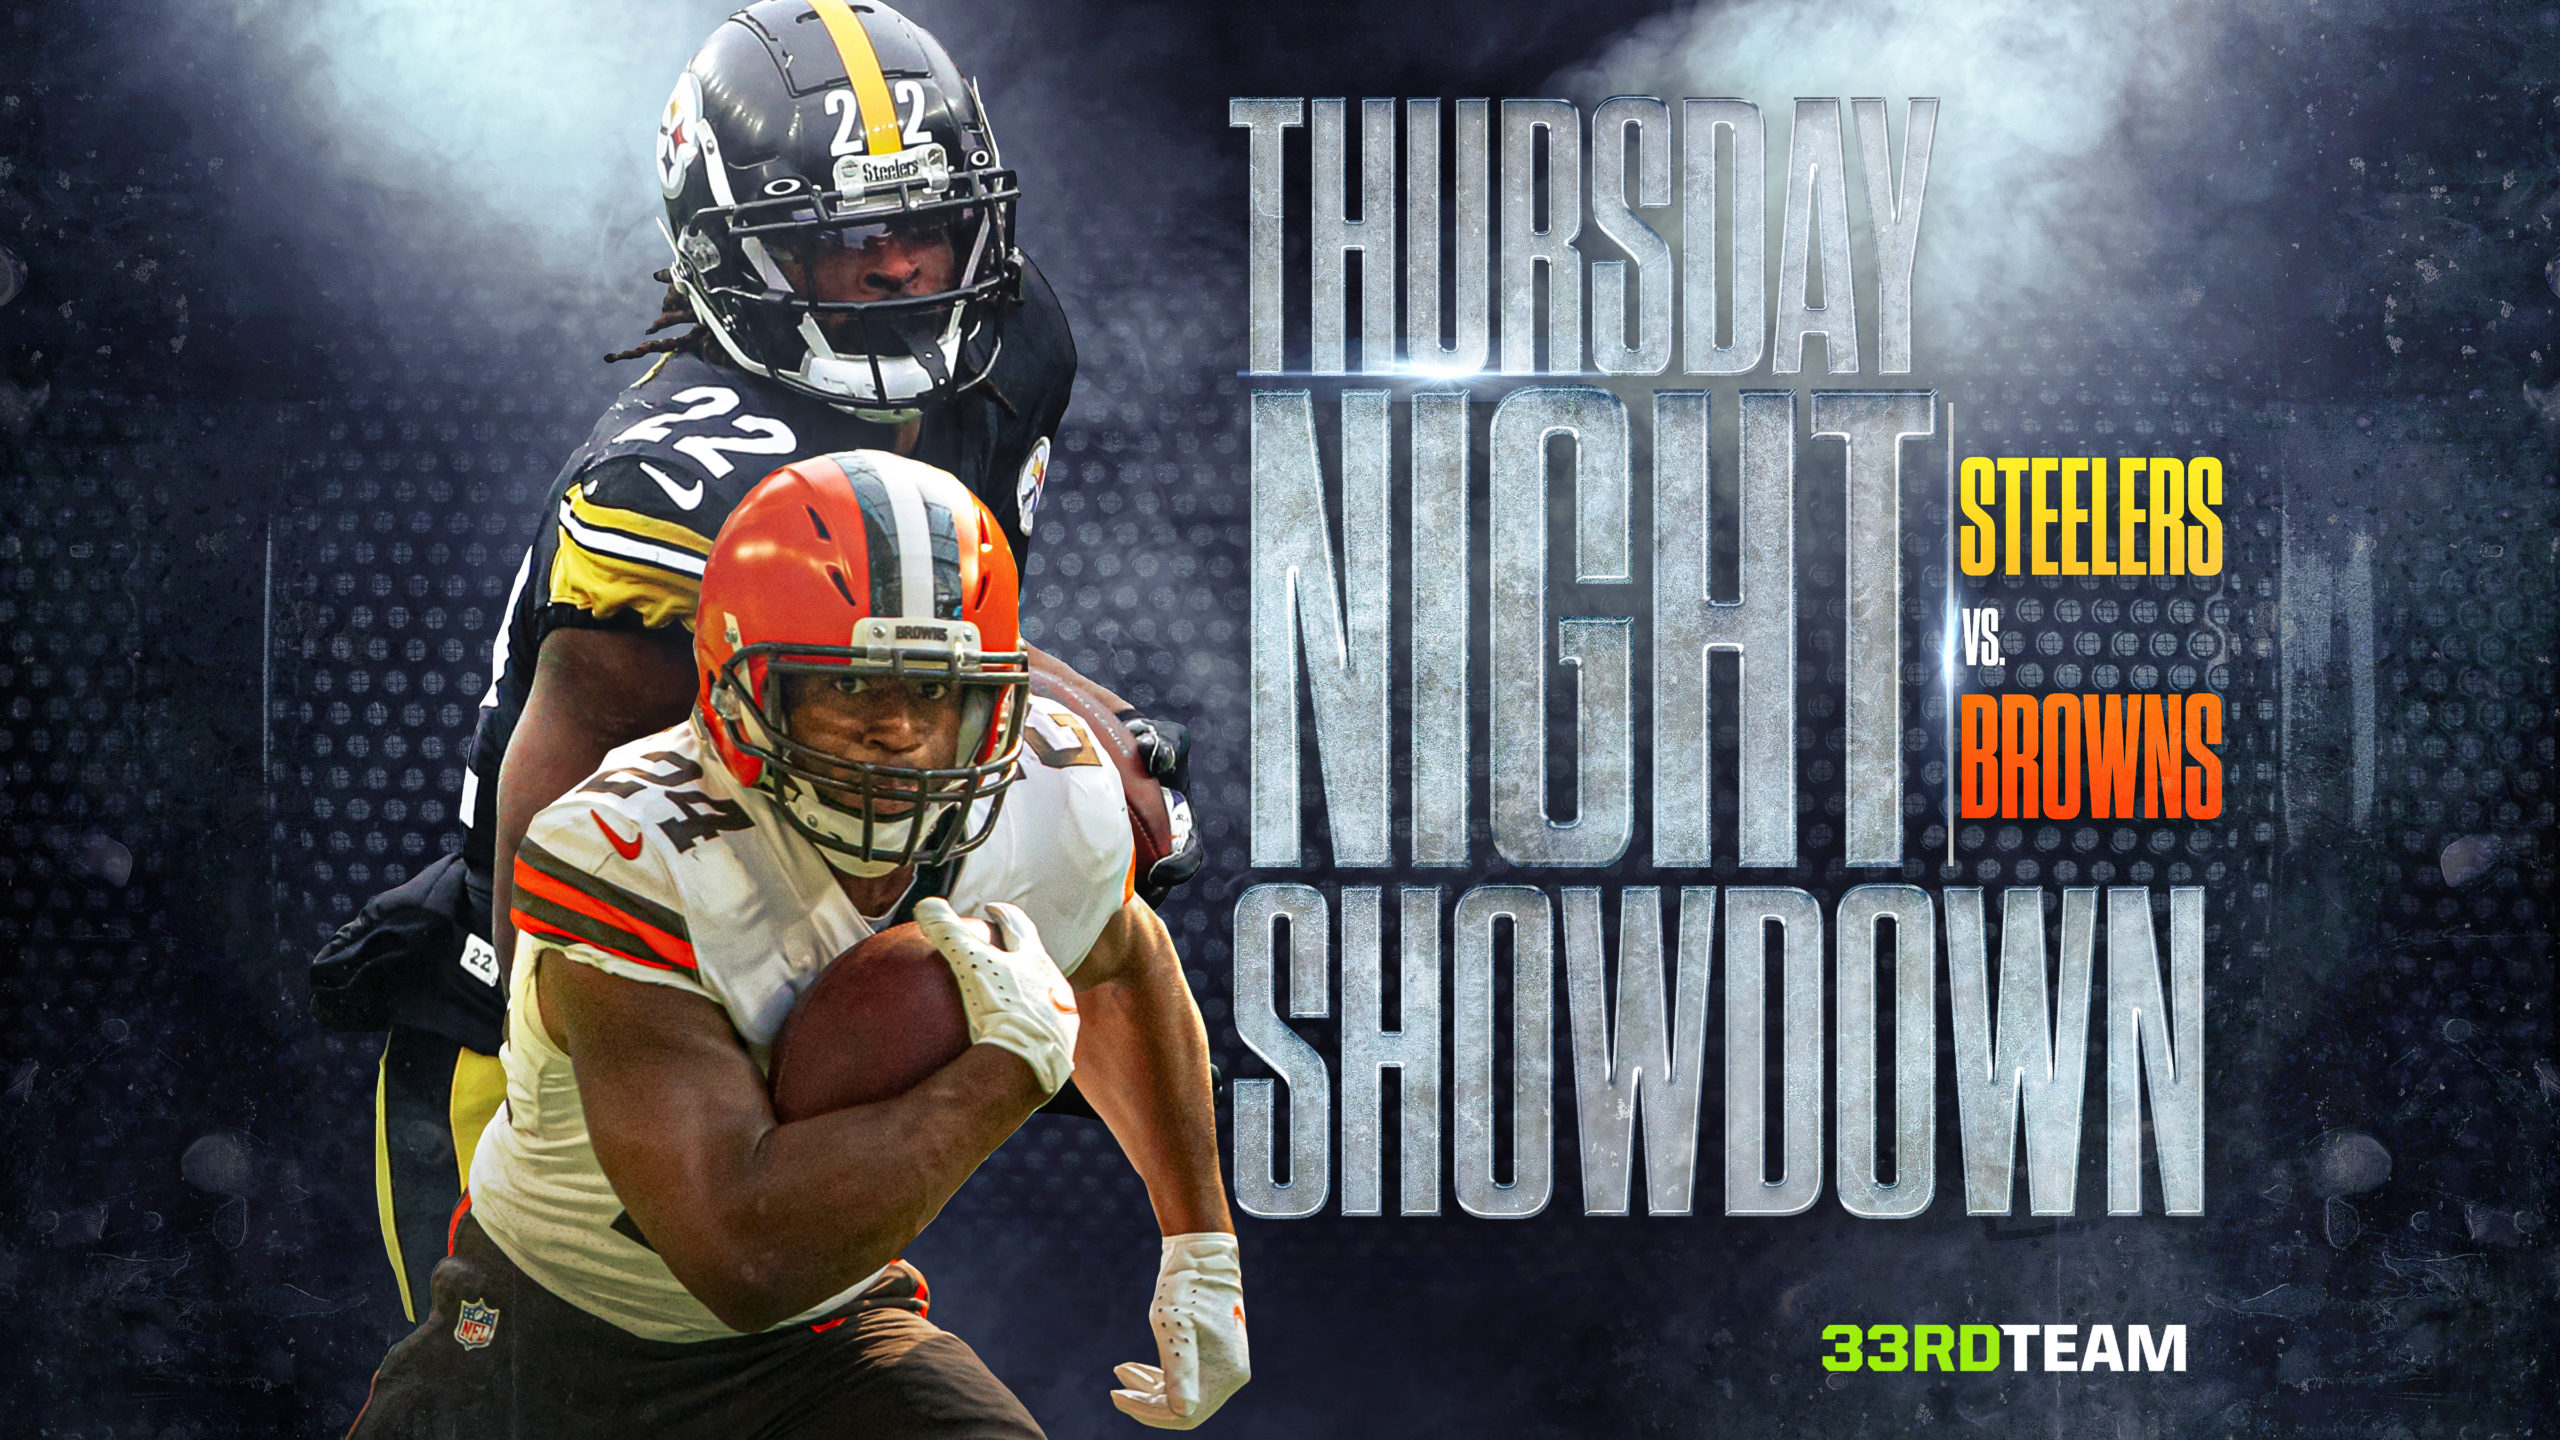 Steelers vs. Browns Thursday Night Showdown